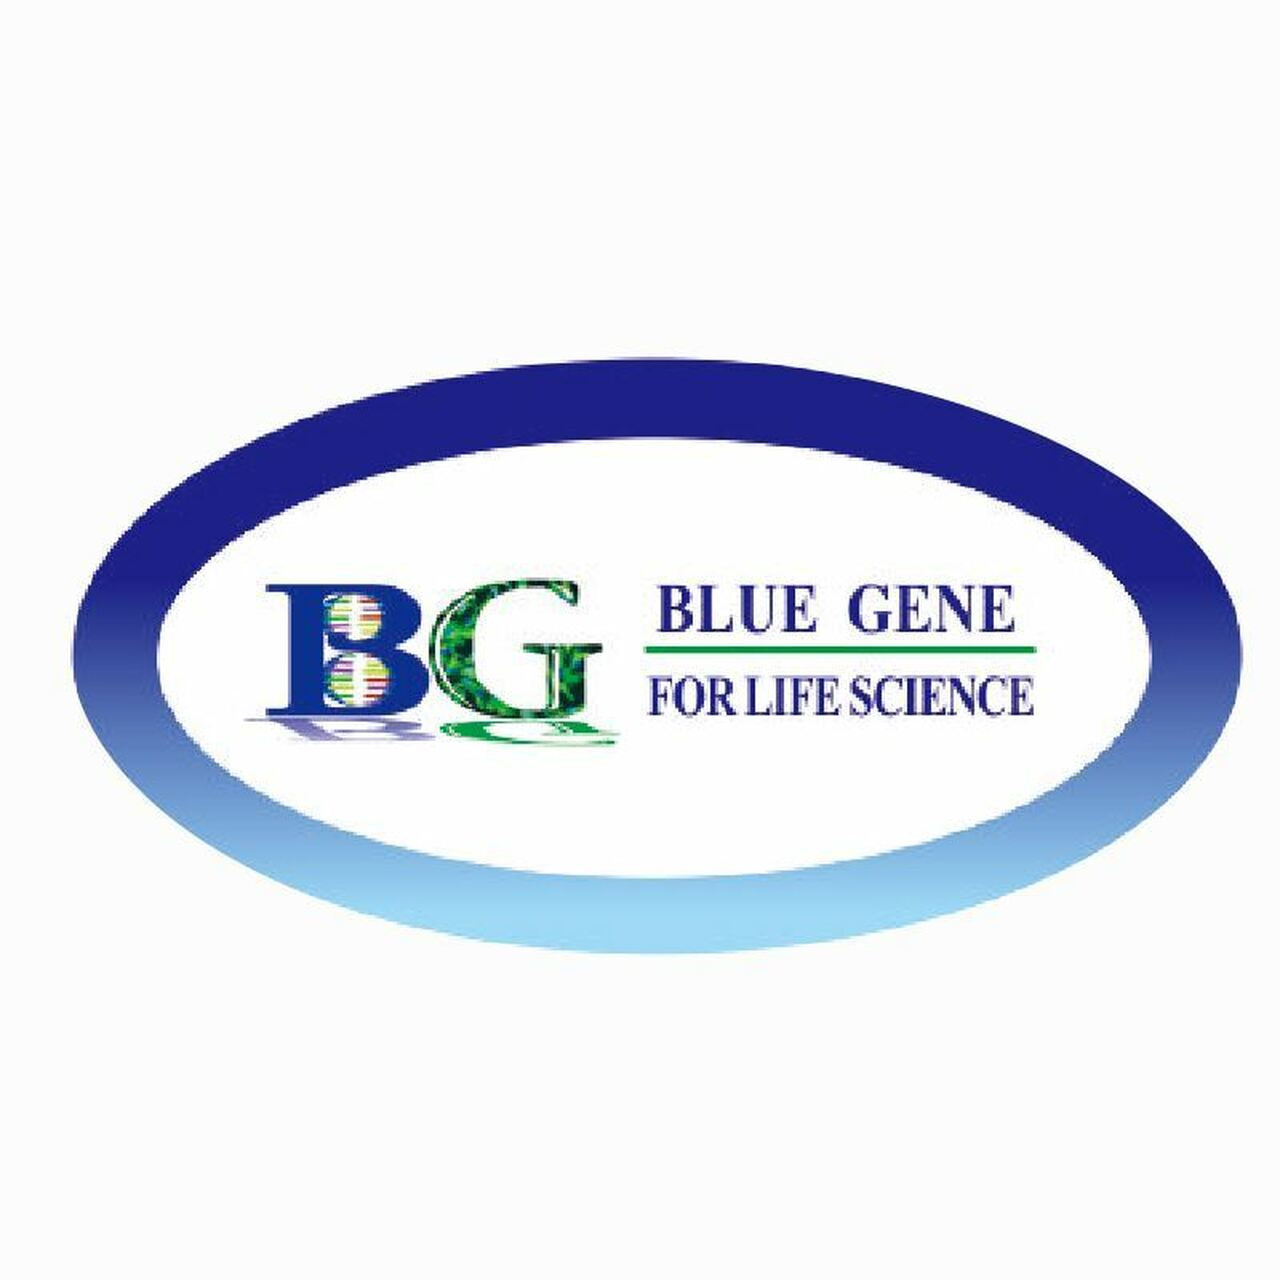 bluegene-transgelin-2-elisa-kit